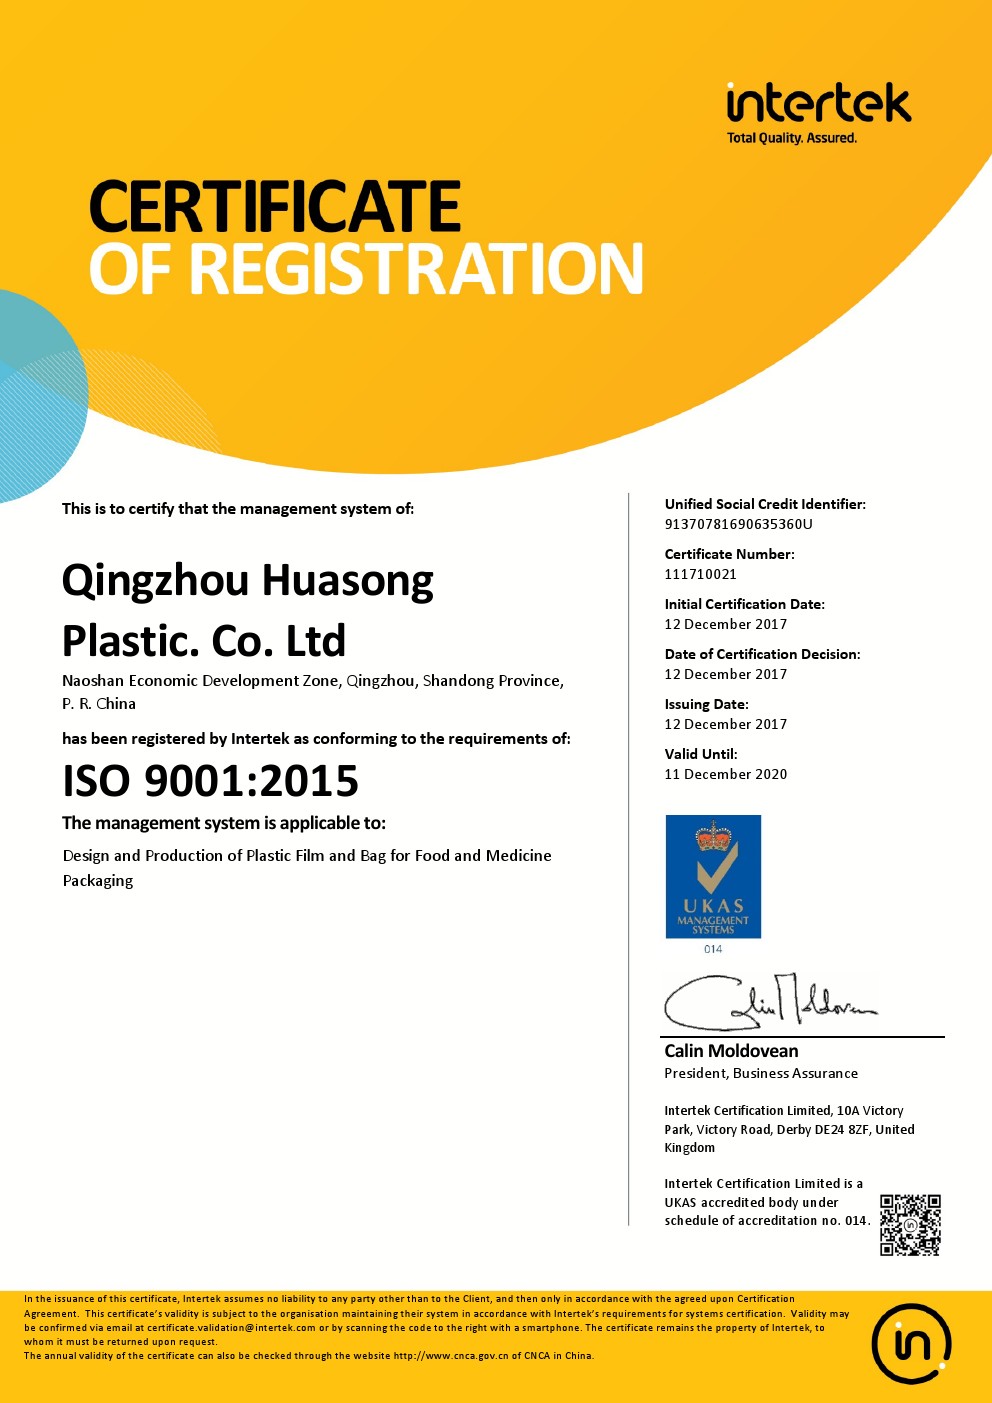 9001 management system certification 2